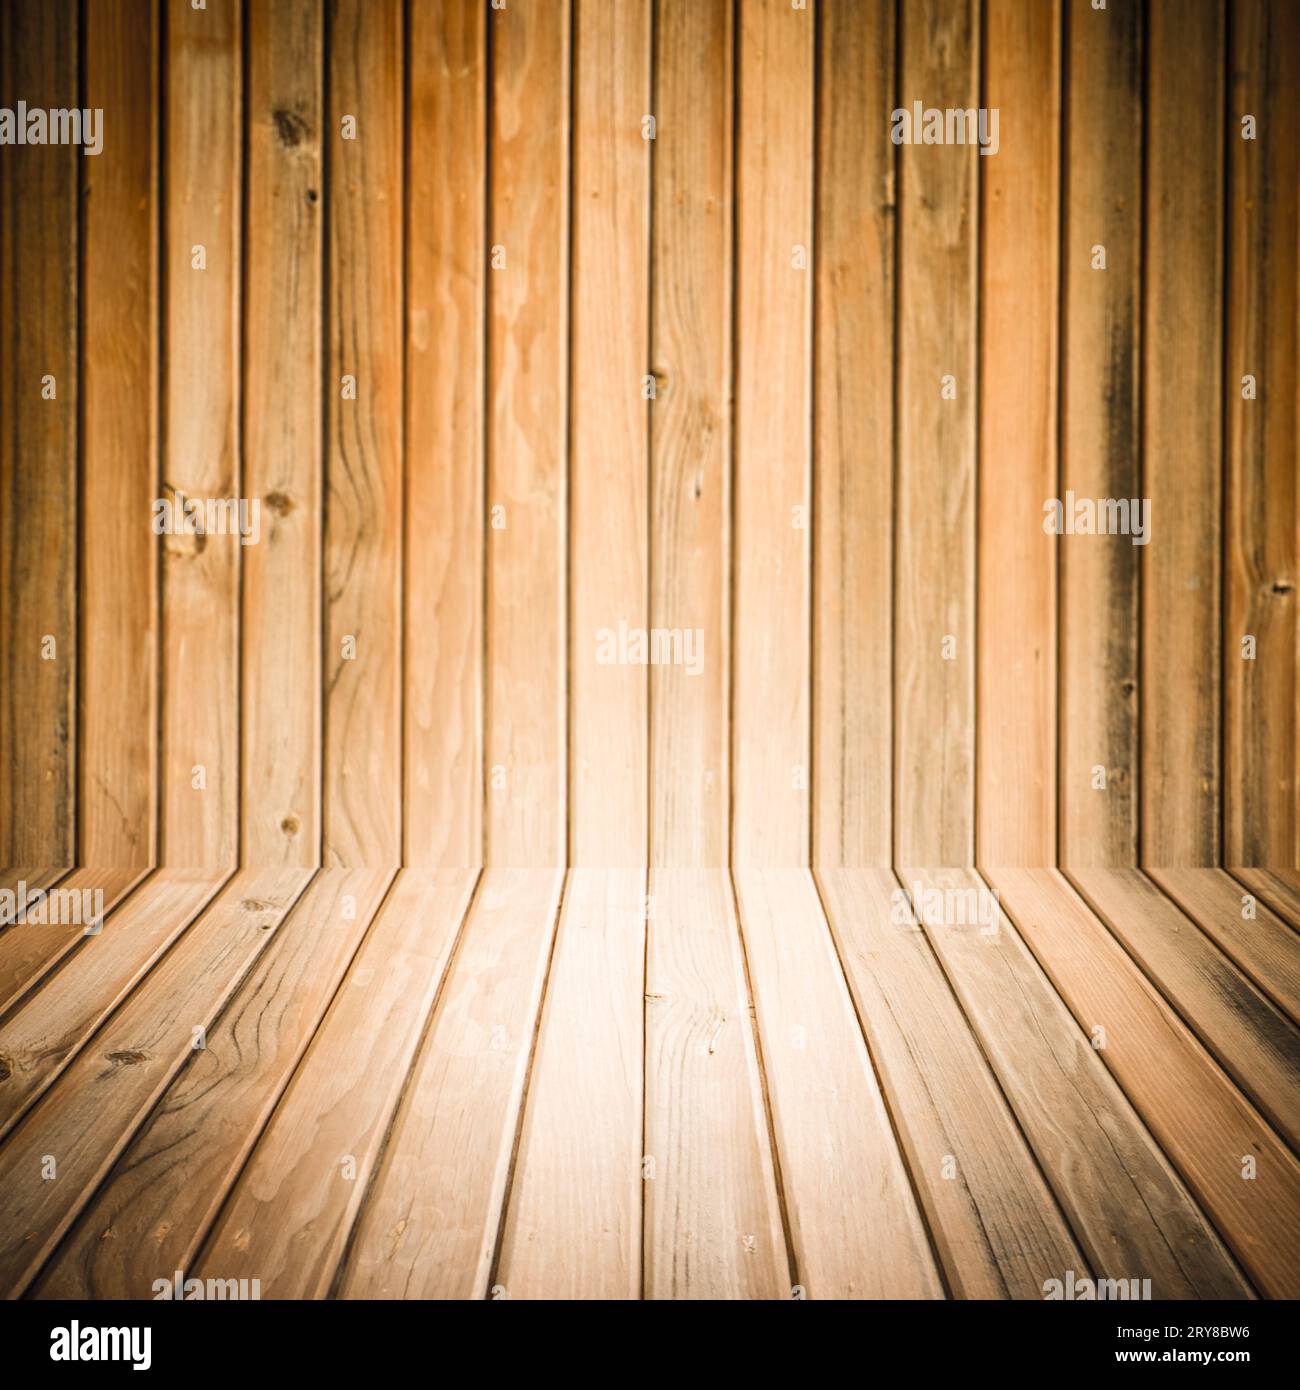 Texture of pine wood Stock Photo